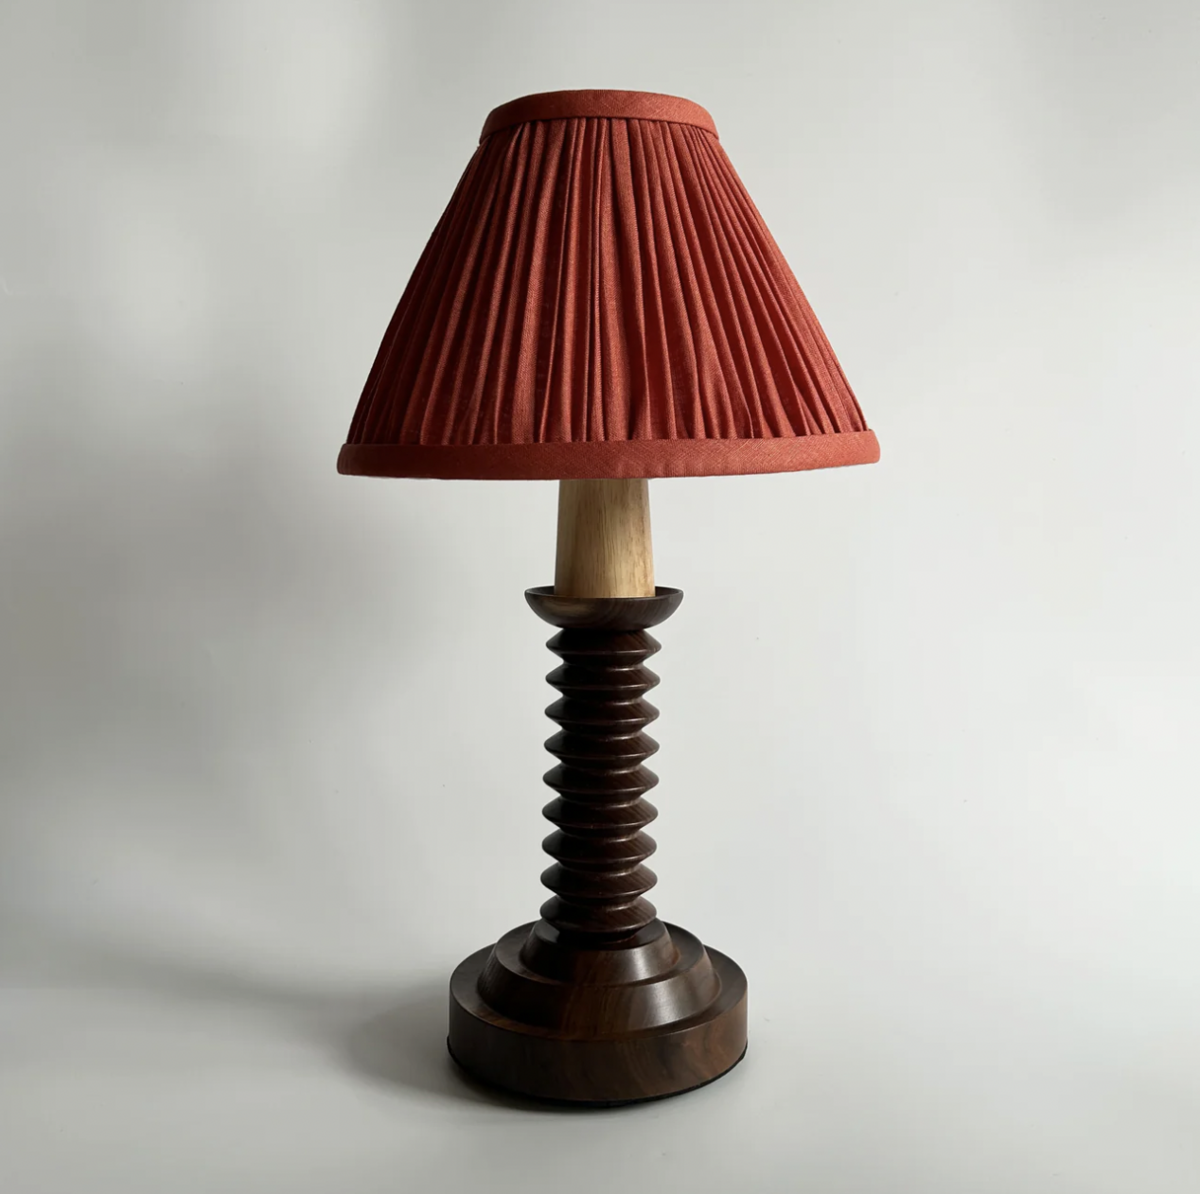 Bright idea: The rise of the portable lamp